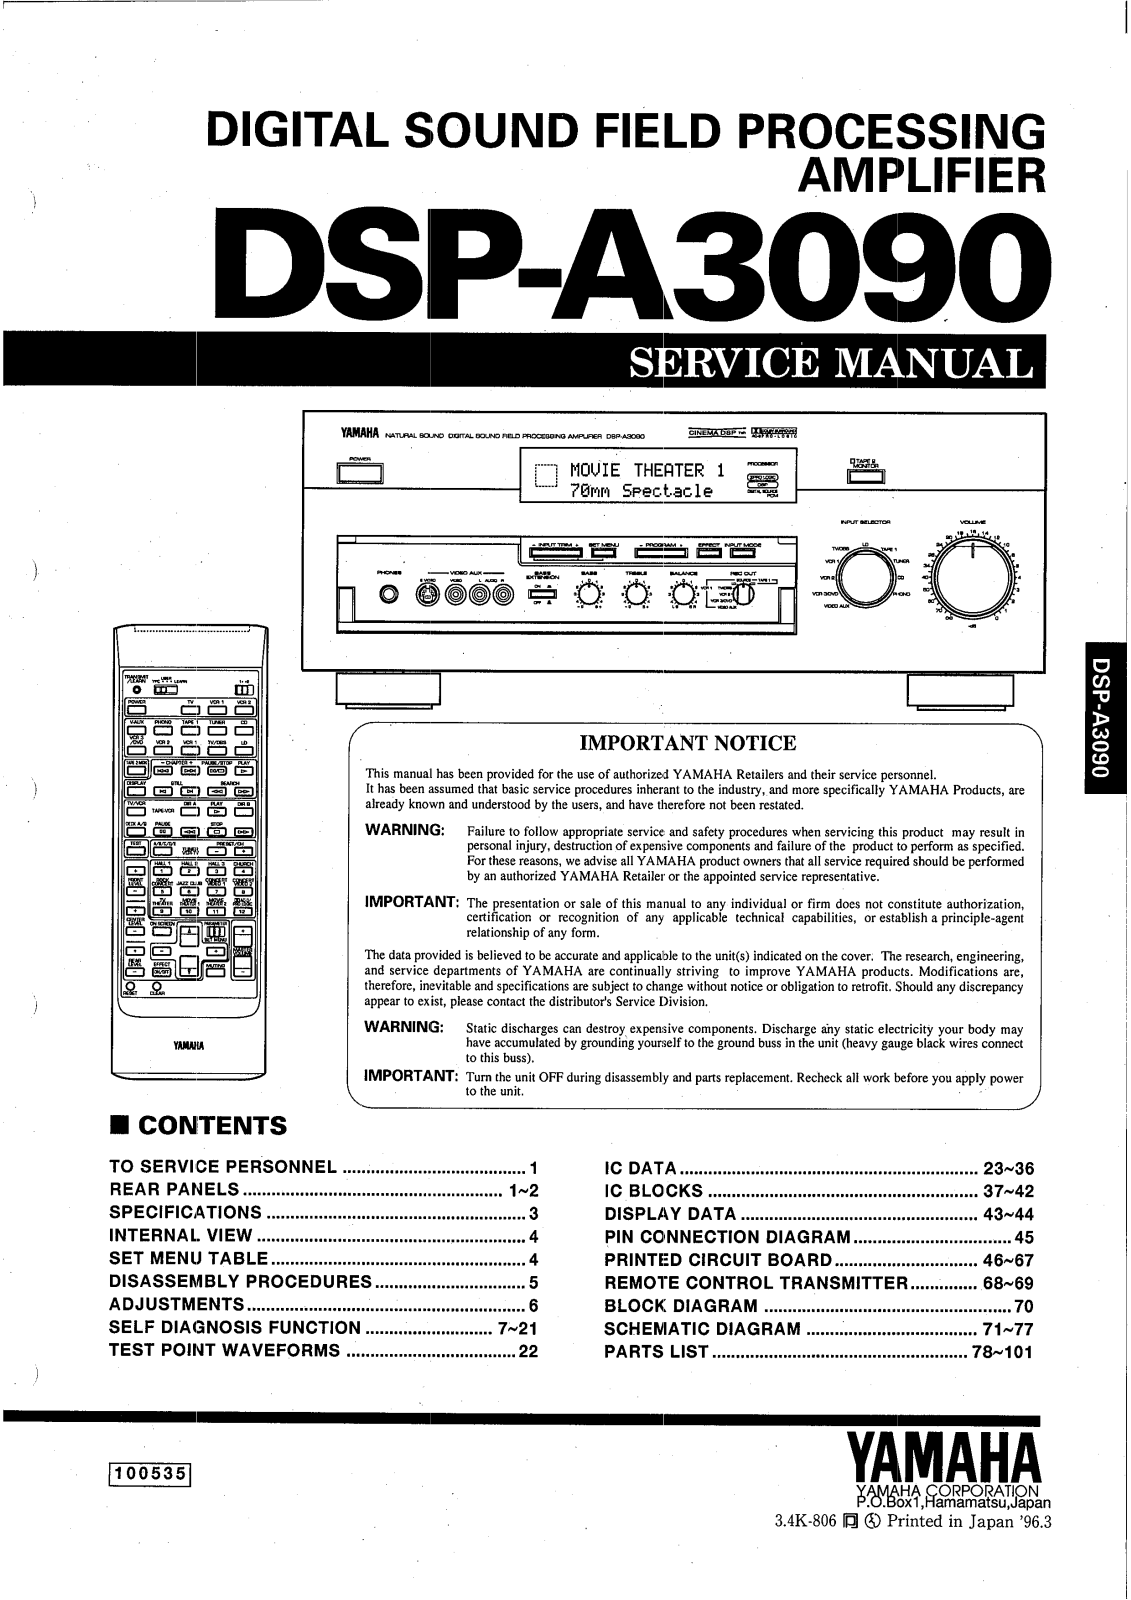 Yamaha DSPA-3090 Service manual